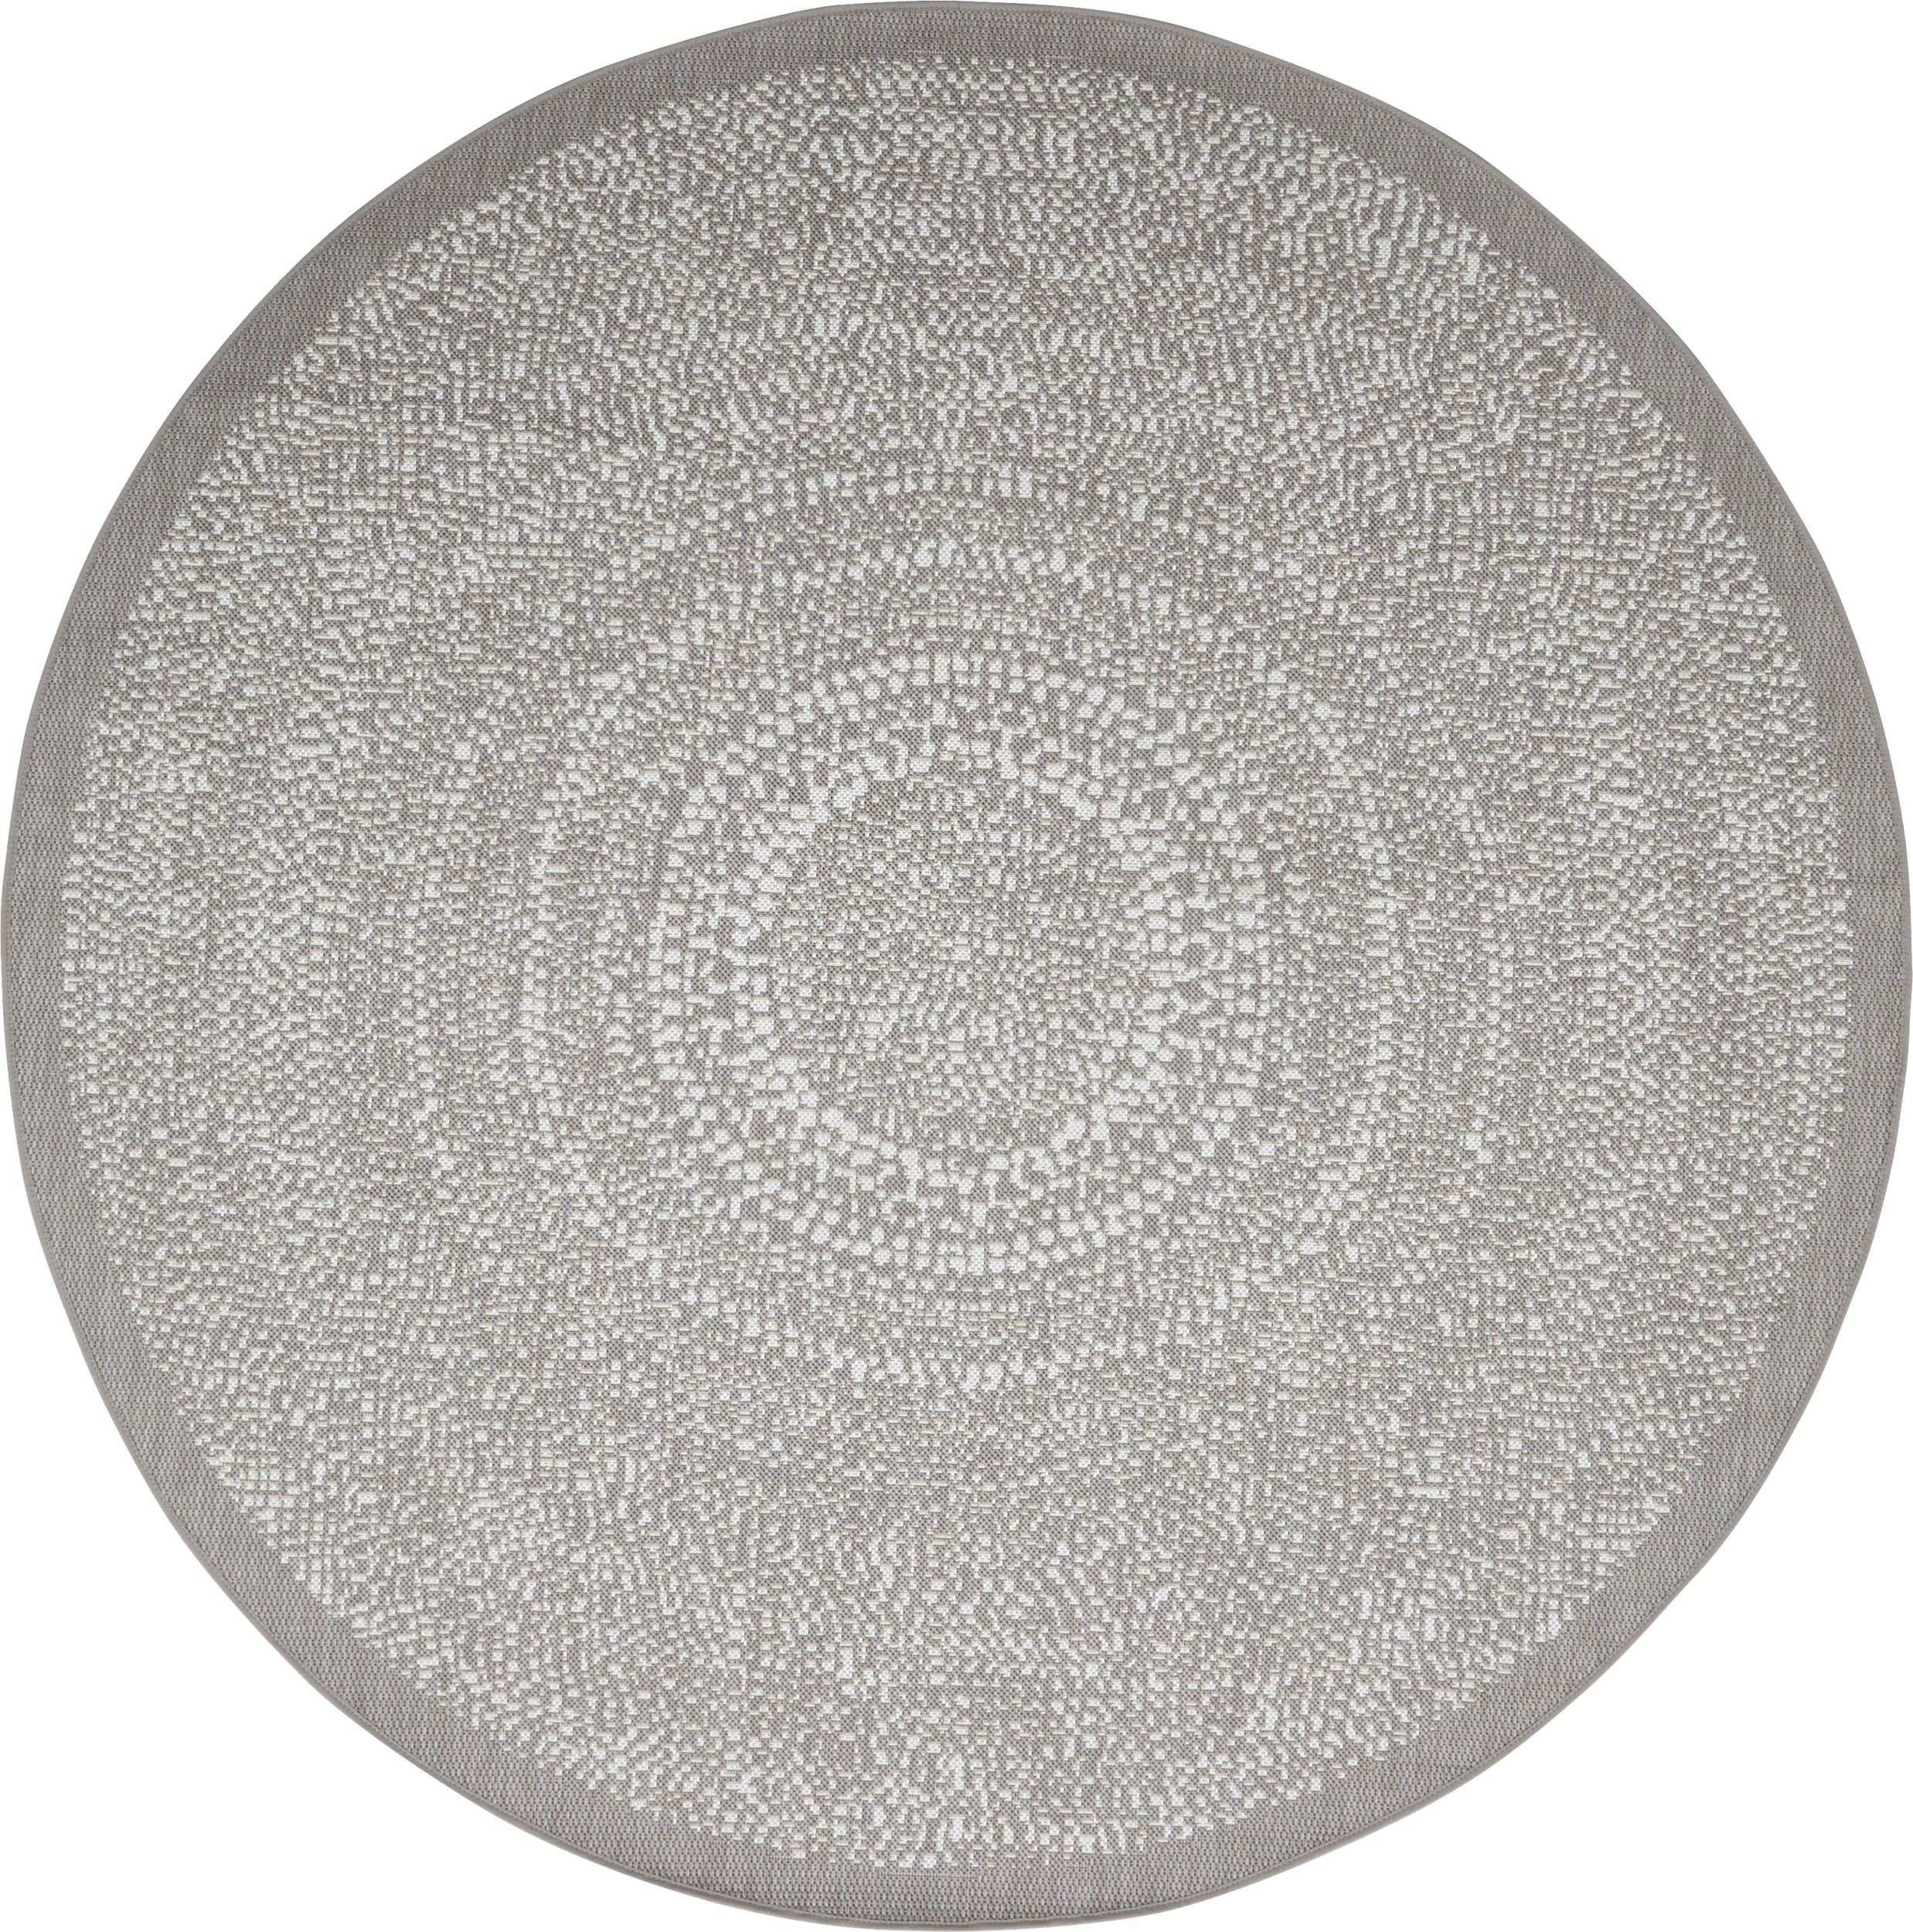 Essenza utomhusmatta 200 cm - Taupefärgad polyester och off-white mönster